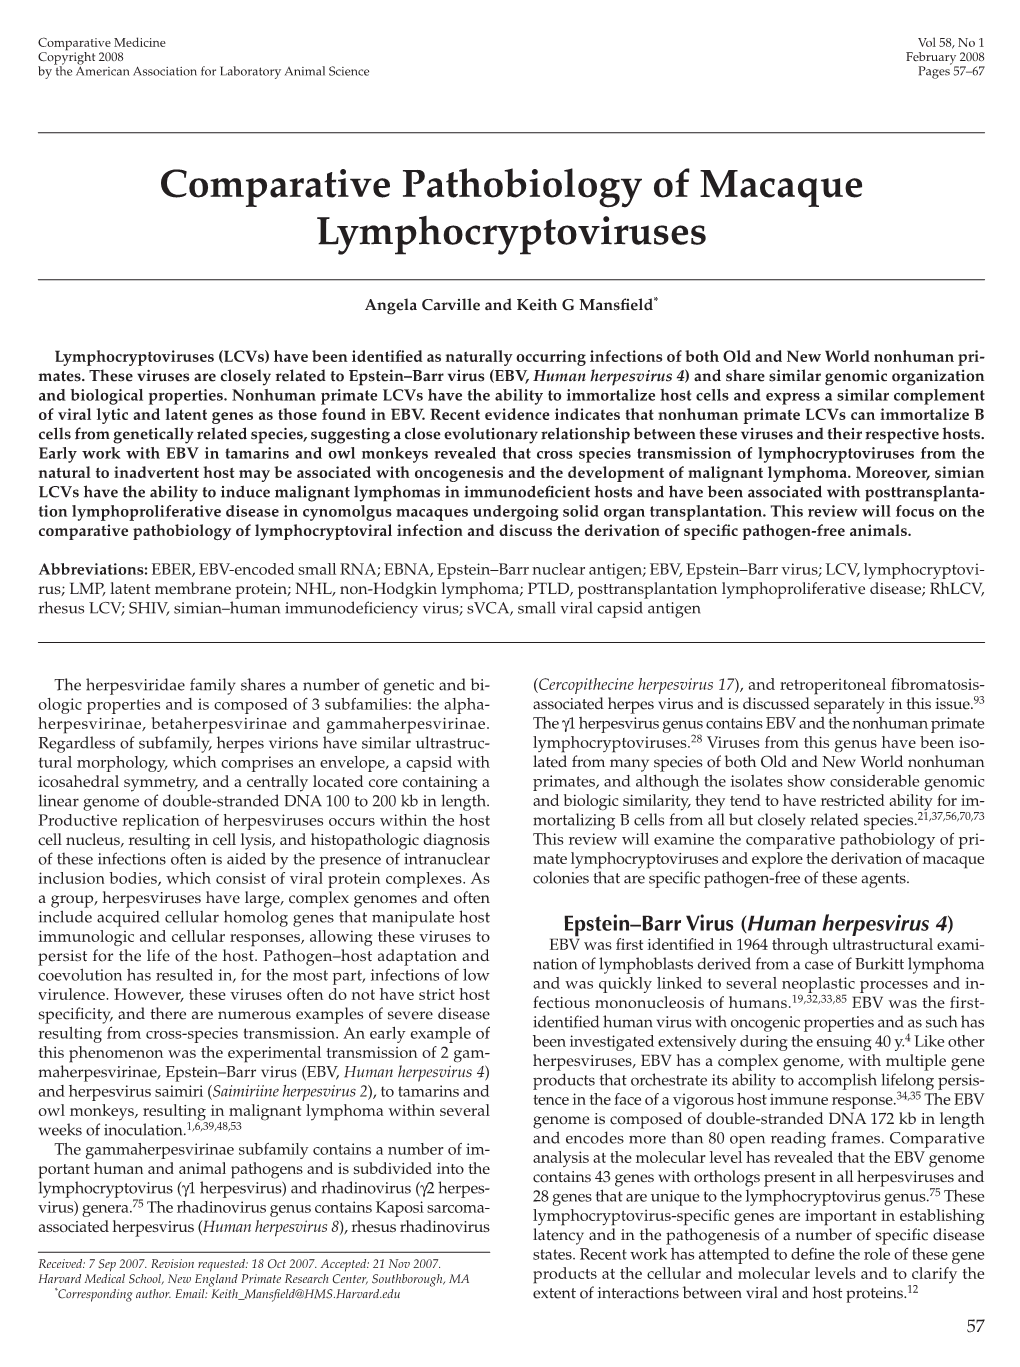 Comparative Pathobiology of Macaque Lymphocryptoviruses